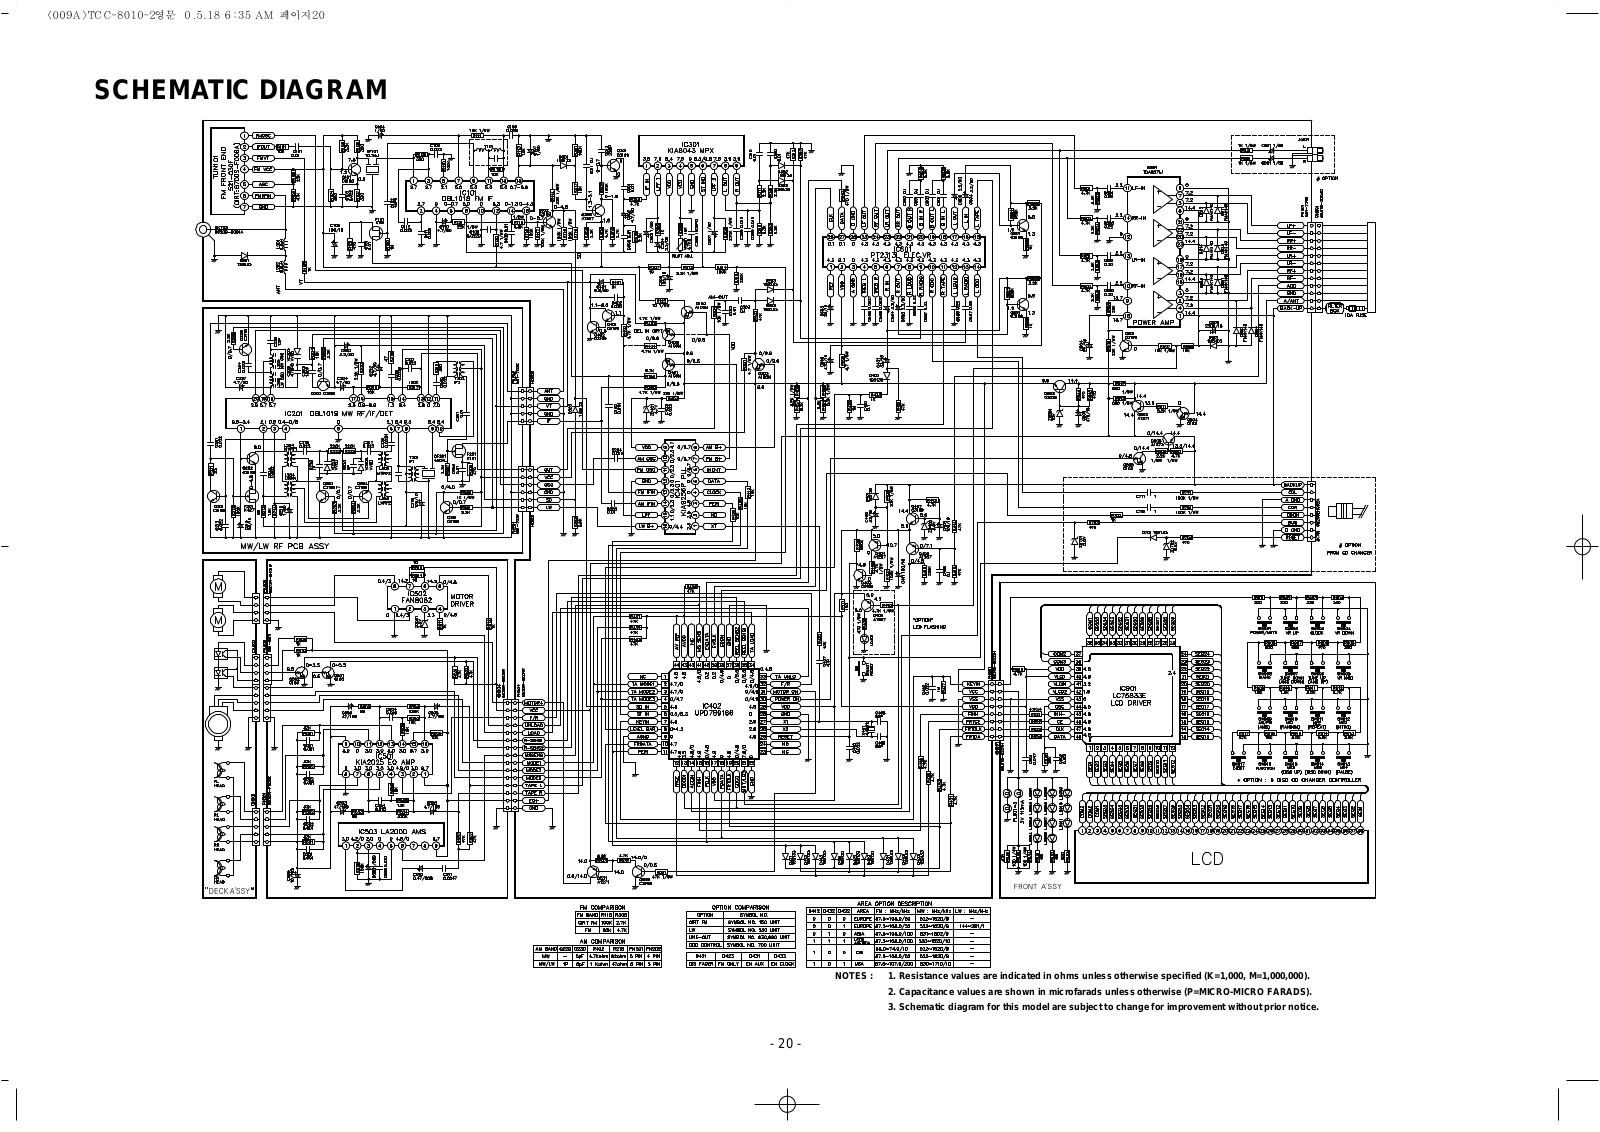 LG TCC-8010 Schematic